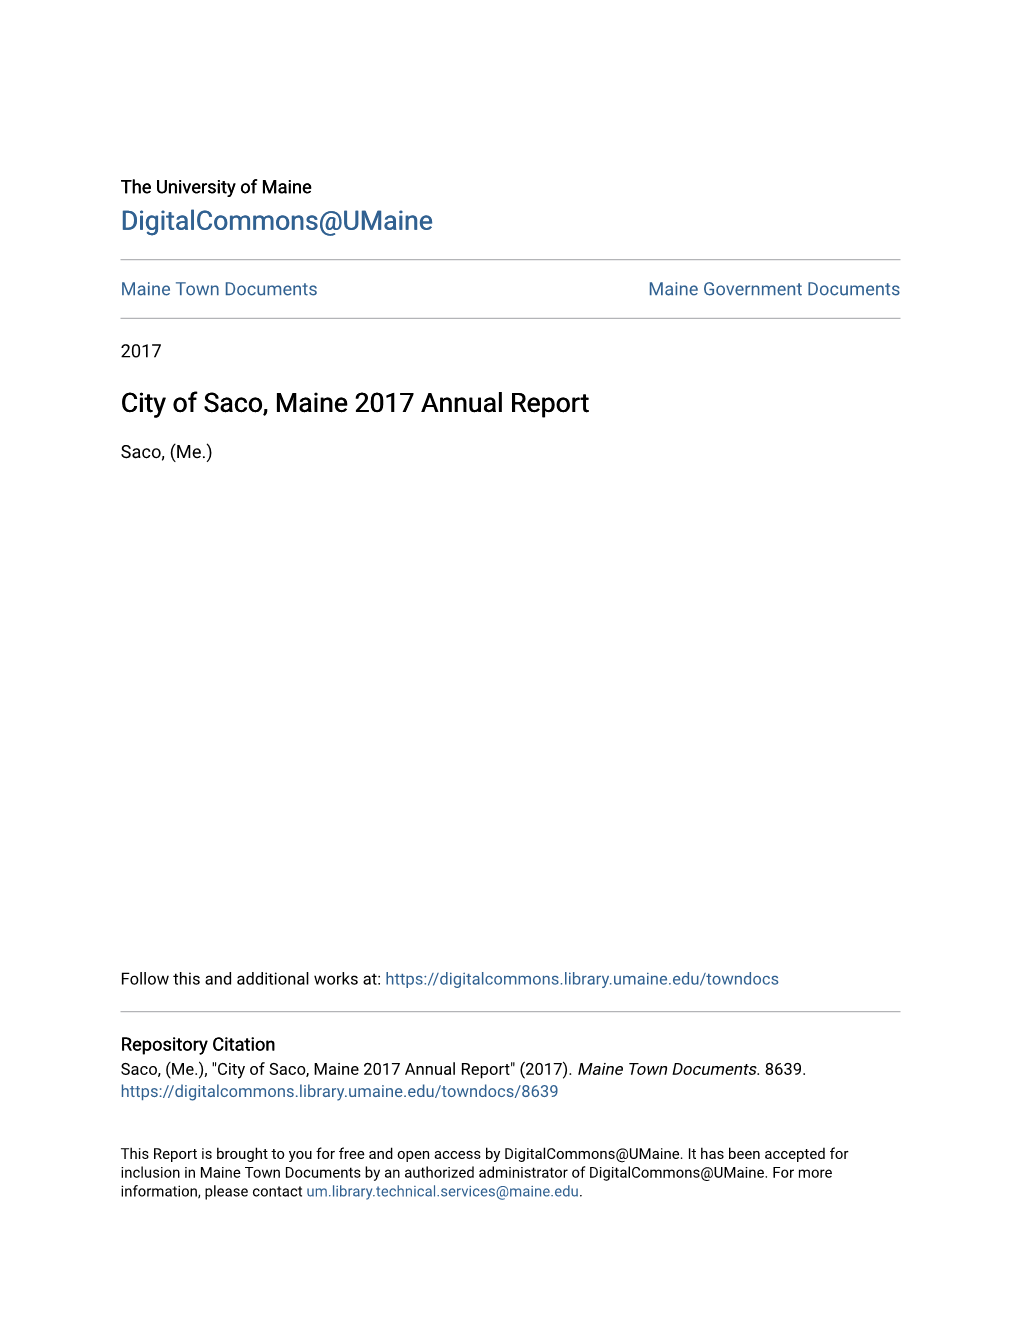 City of Saco, Maine 2017 Annual Report